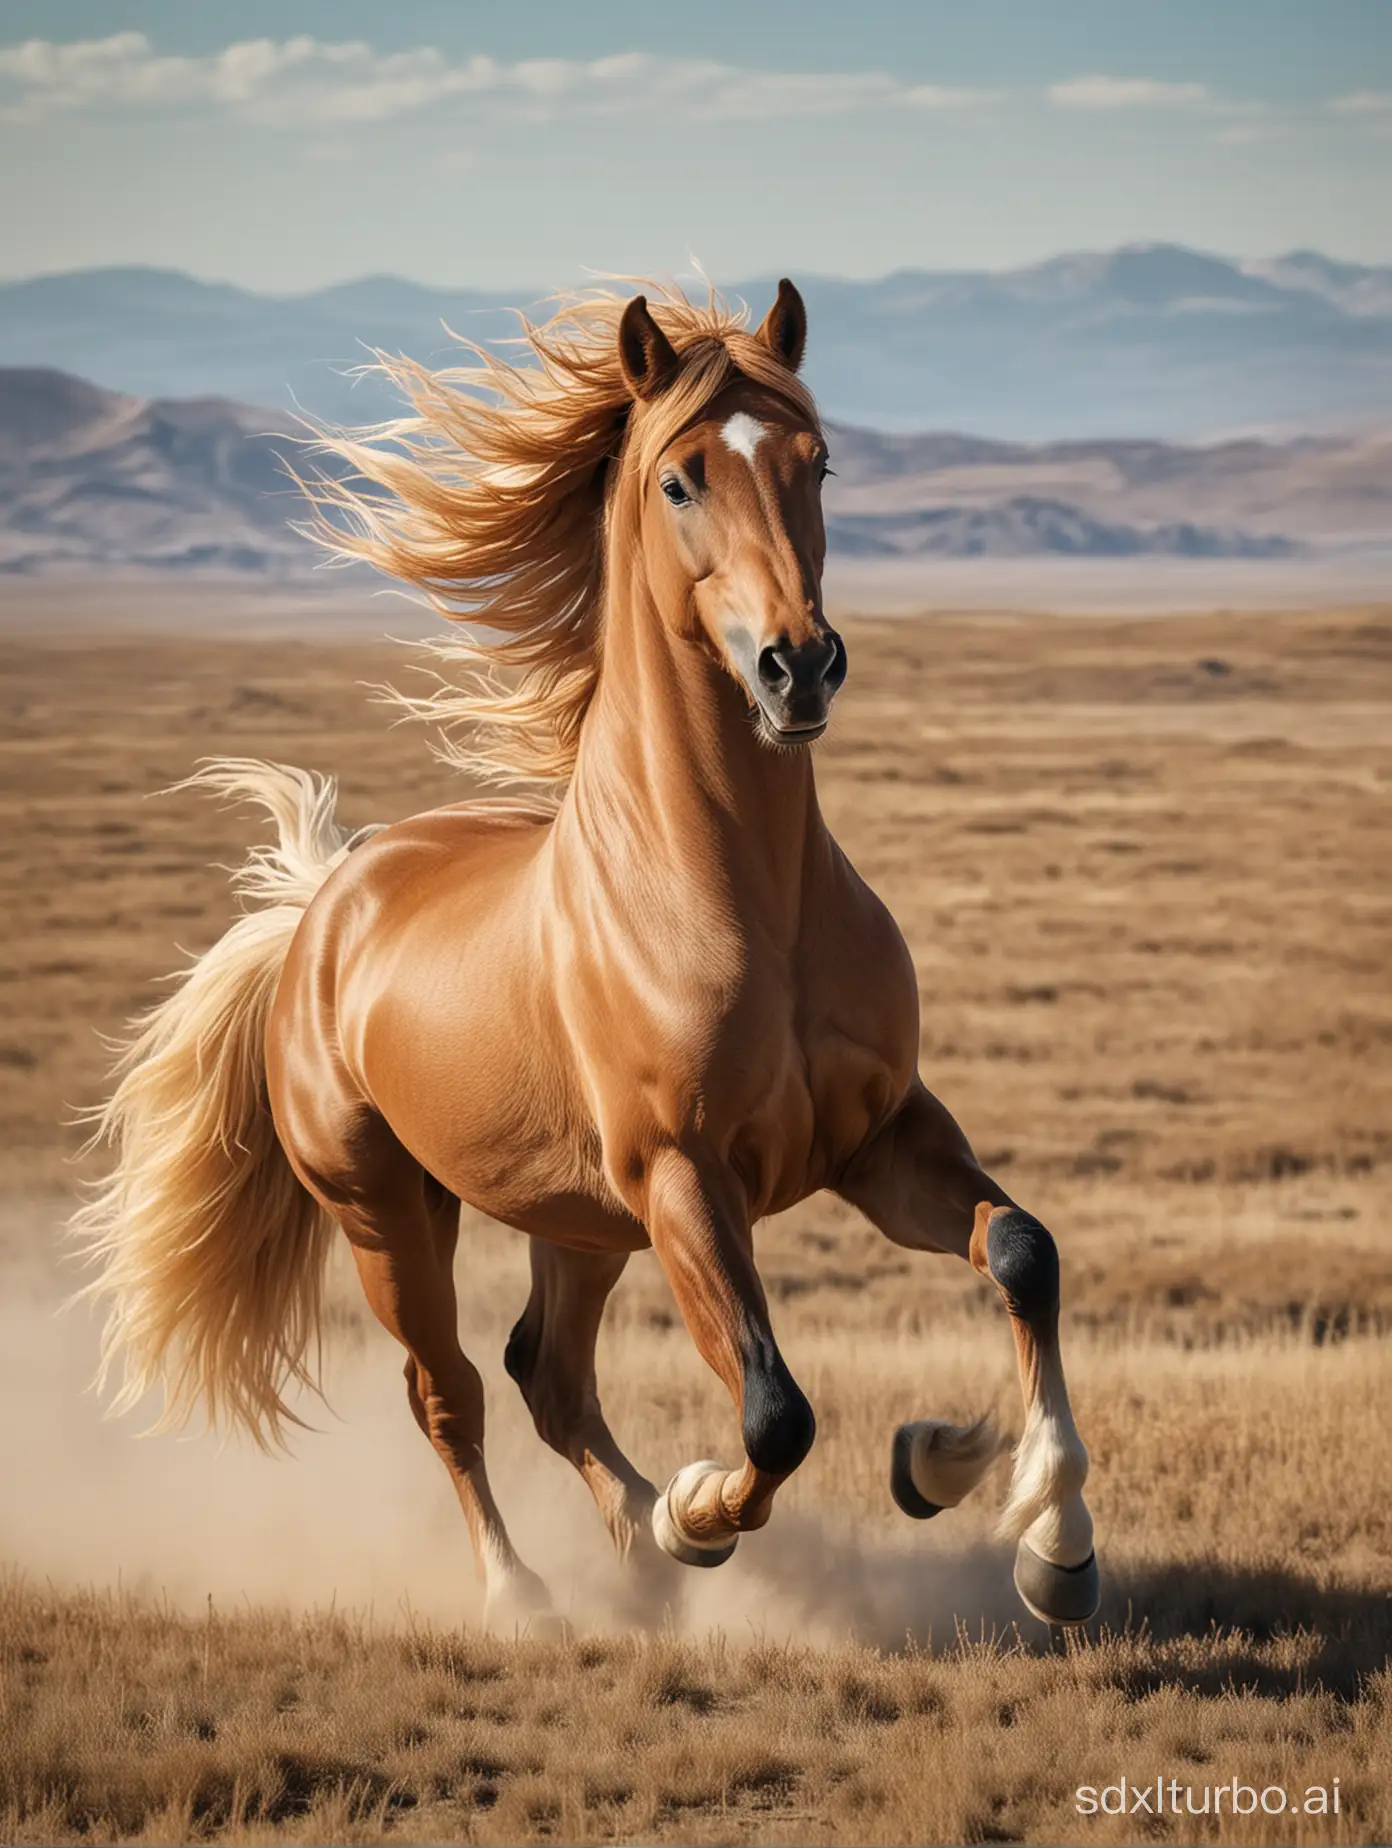 Himorii, the Mongolian wind horse, runs and traverses the vast Mongolian steppe